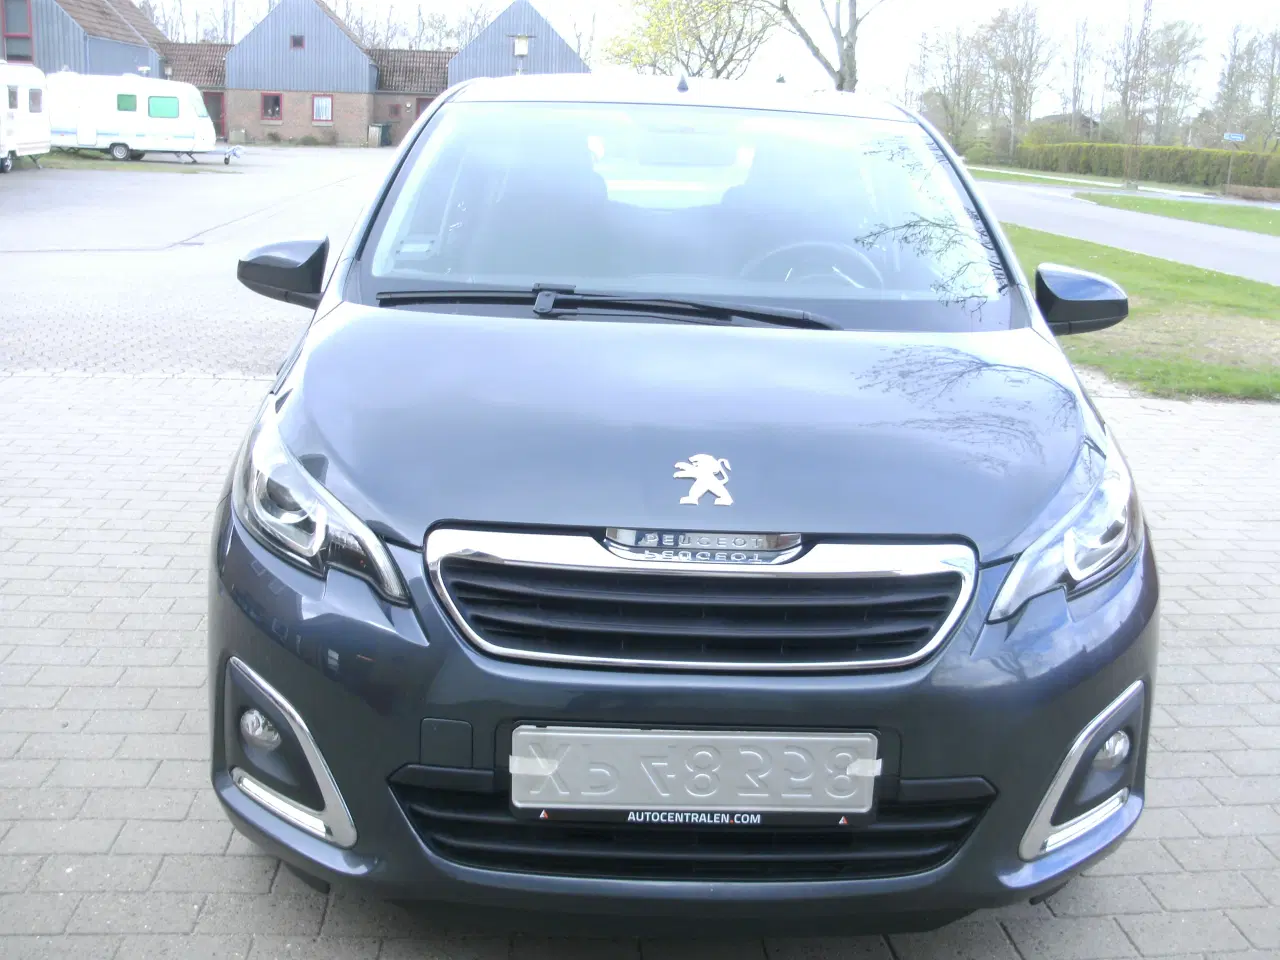 Billede 1 - Peugeot 108. 1.0 E-VTI  69 HK årg 2017